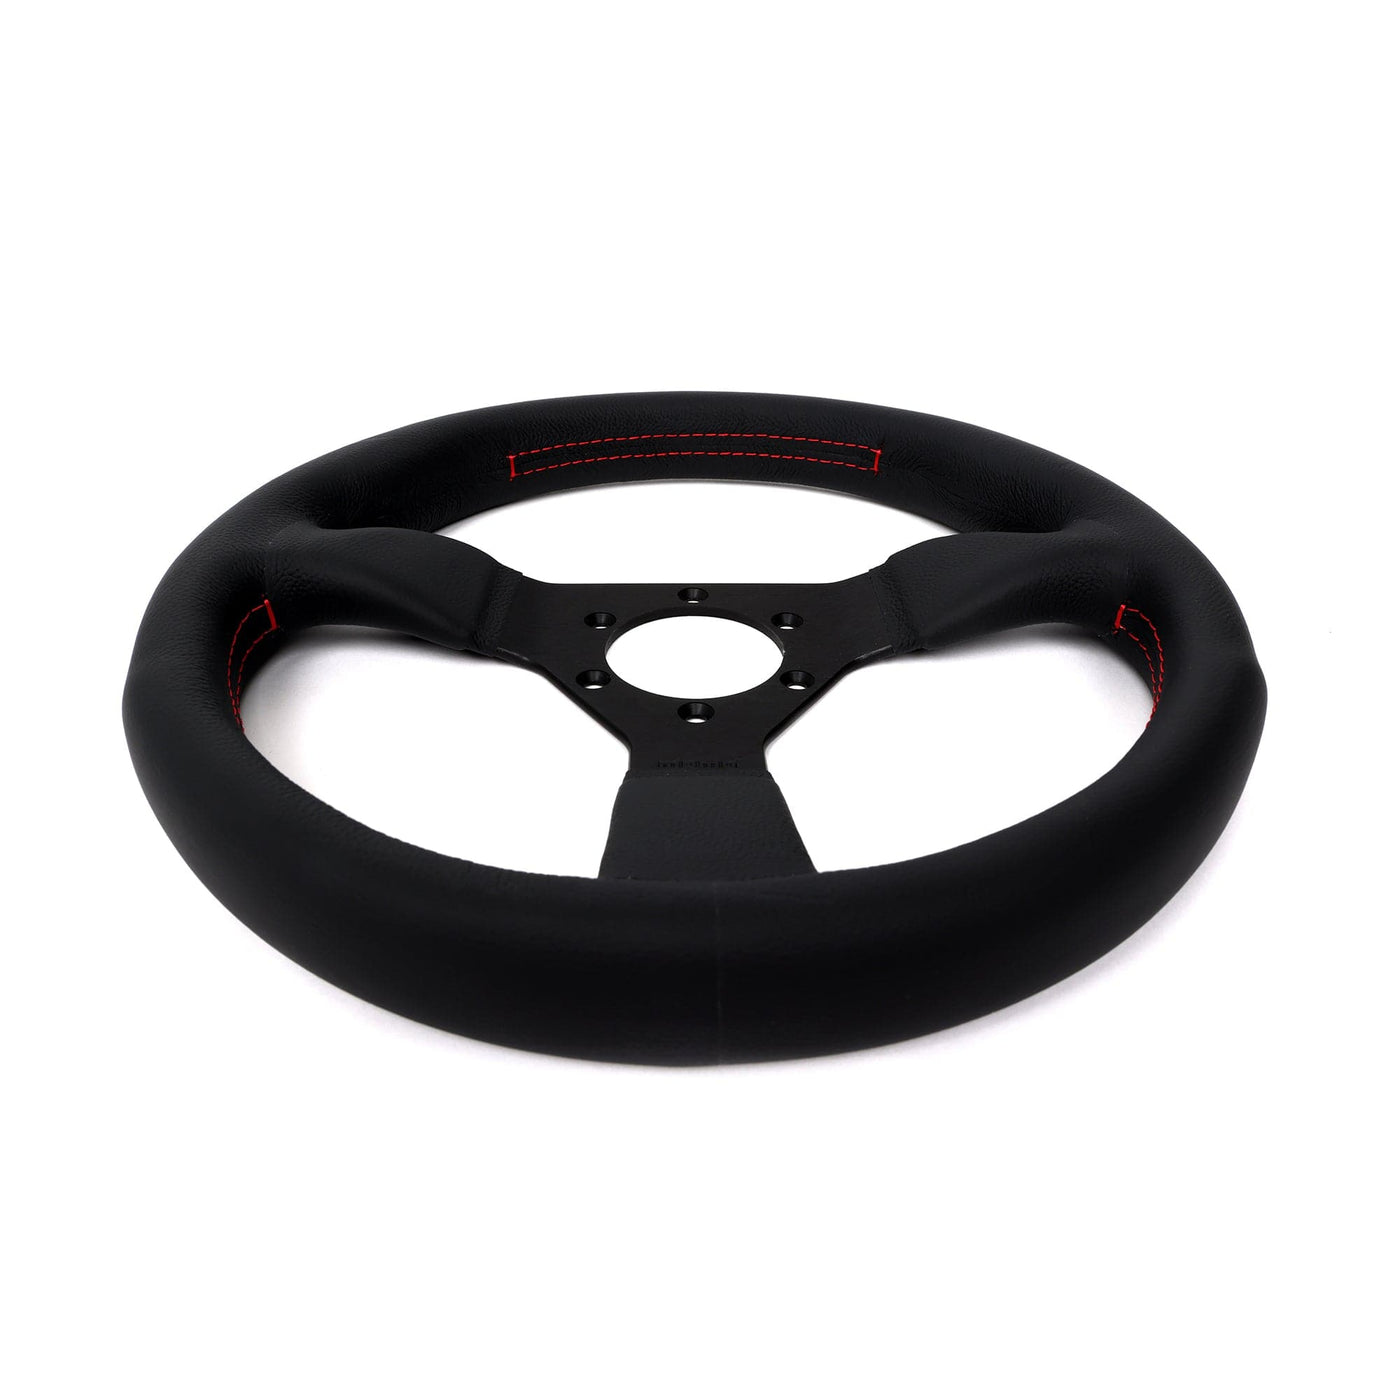 Momo Motorsports Momo Montecarlo Leather Steering Wheel 320 mm - Black/Red Stitch/Black Spokes